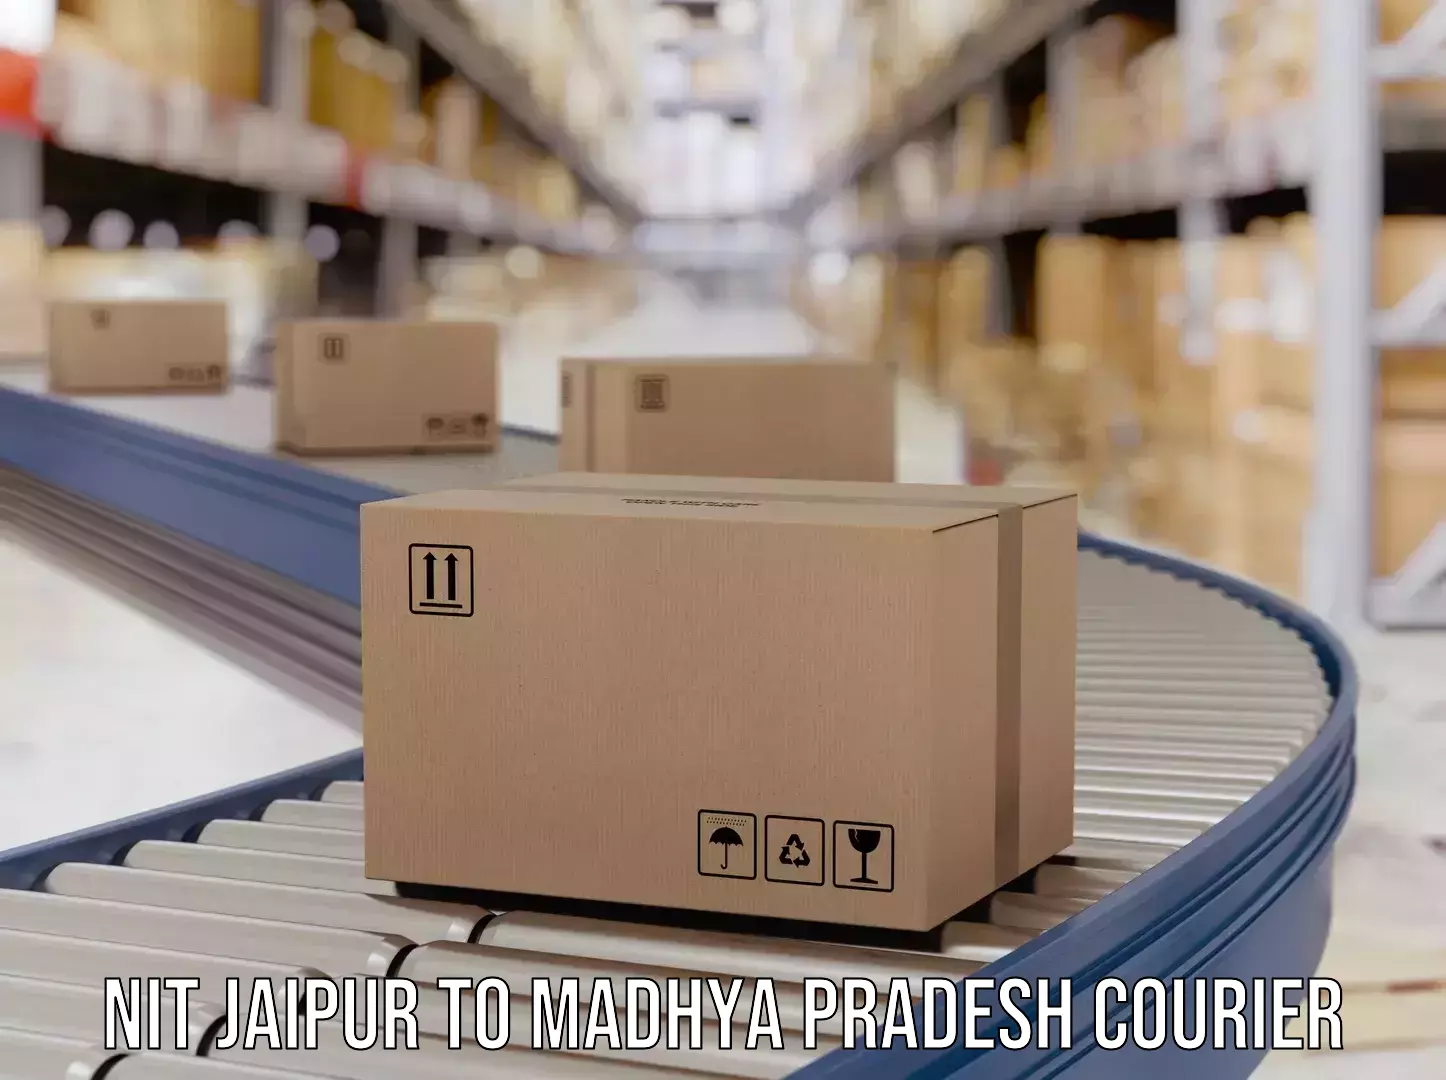 Multi-national courier services NIT Jaipur to Mundi